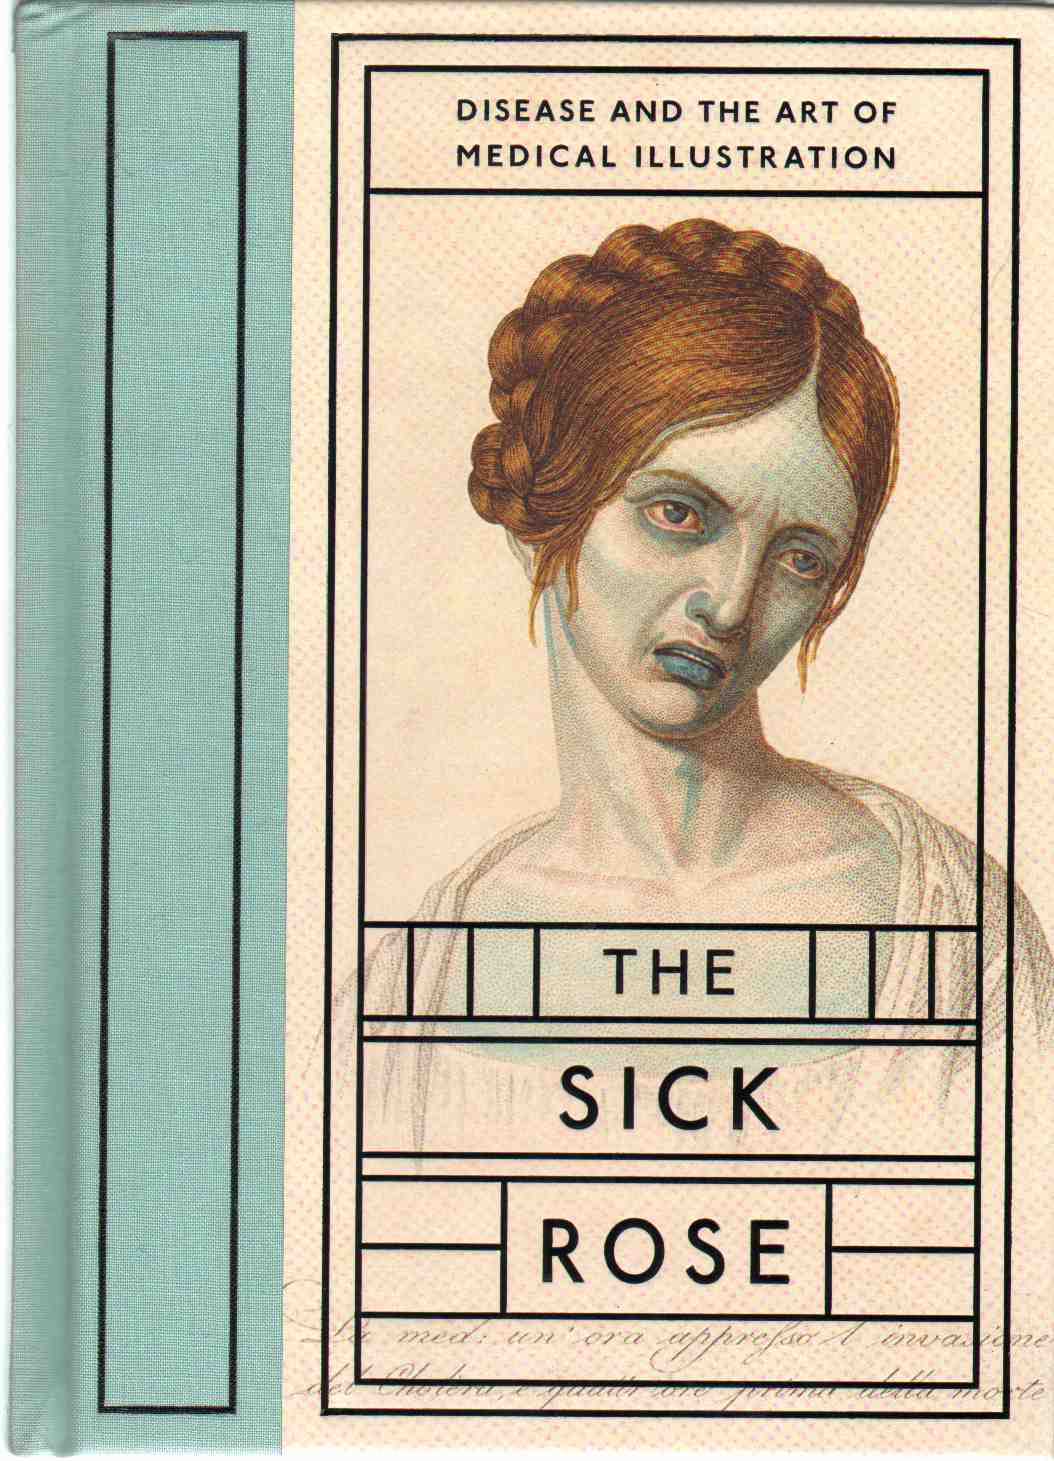 Barnett, Richard - THE SICK ROSE Disease and the Art of Medical Illustration